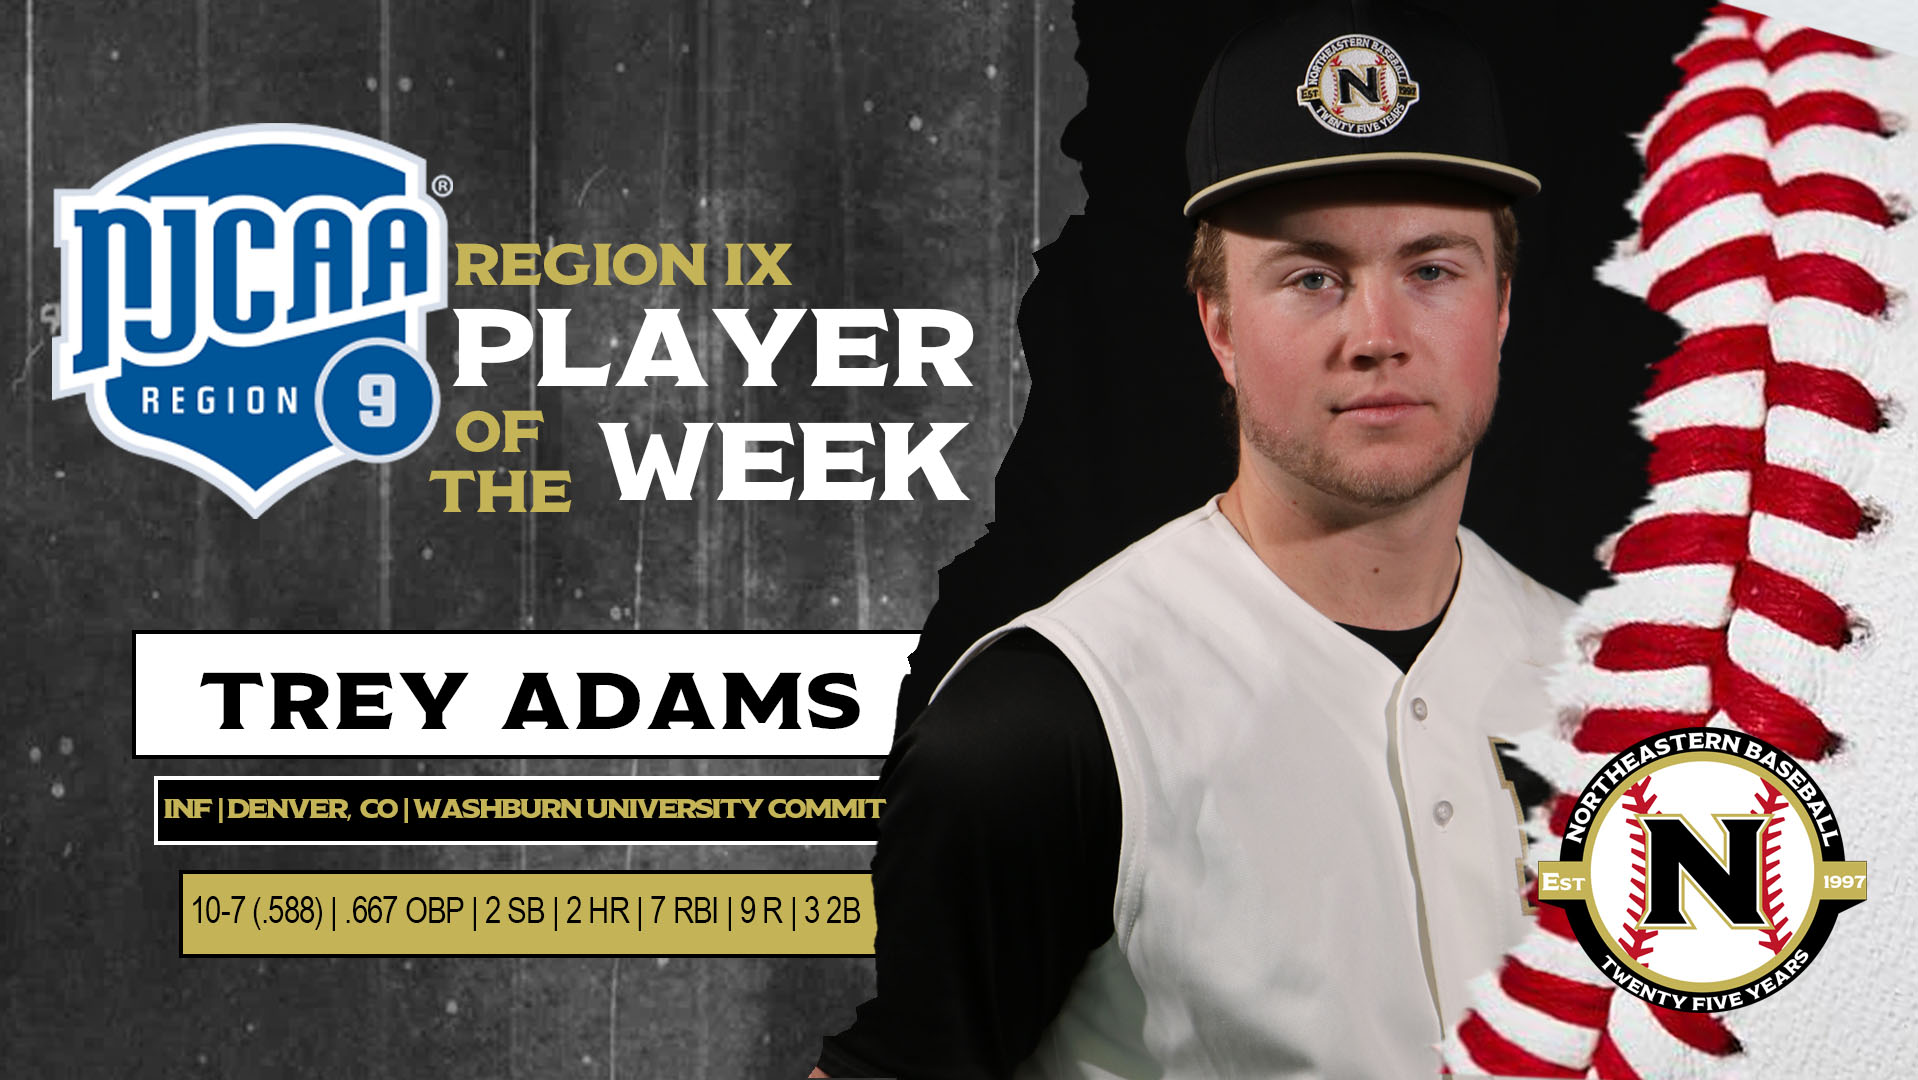 Trey Adams Gets Region IX Player Of The Week